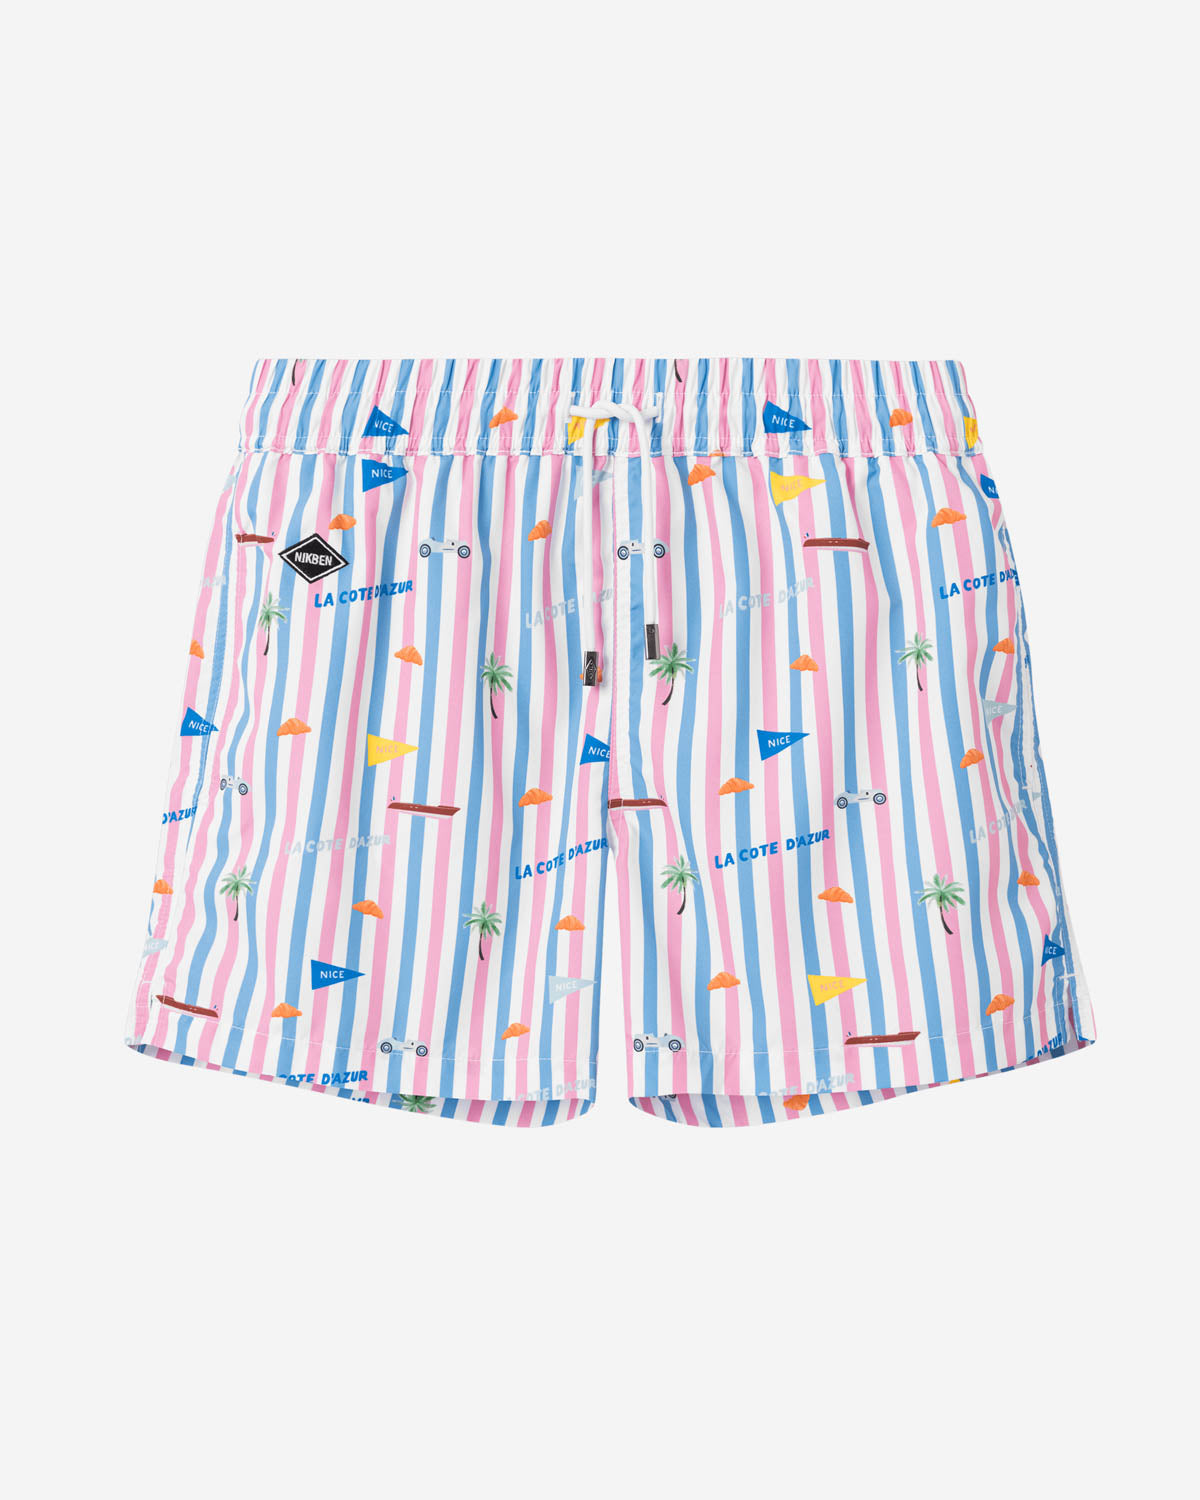 Blue-pink-white striped printed kids swim trunks